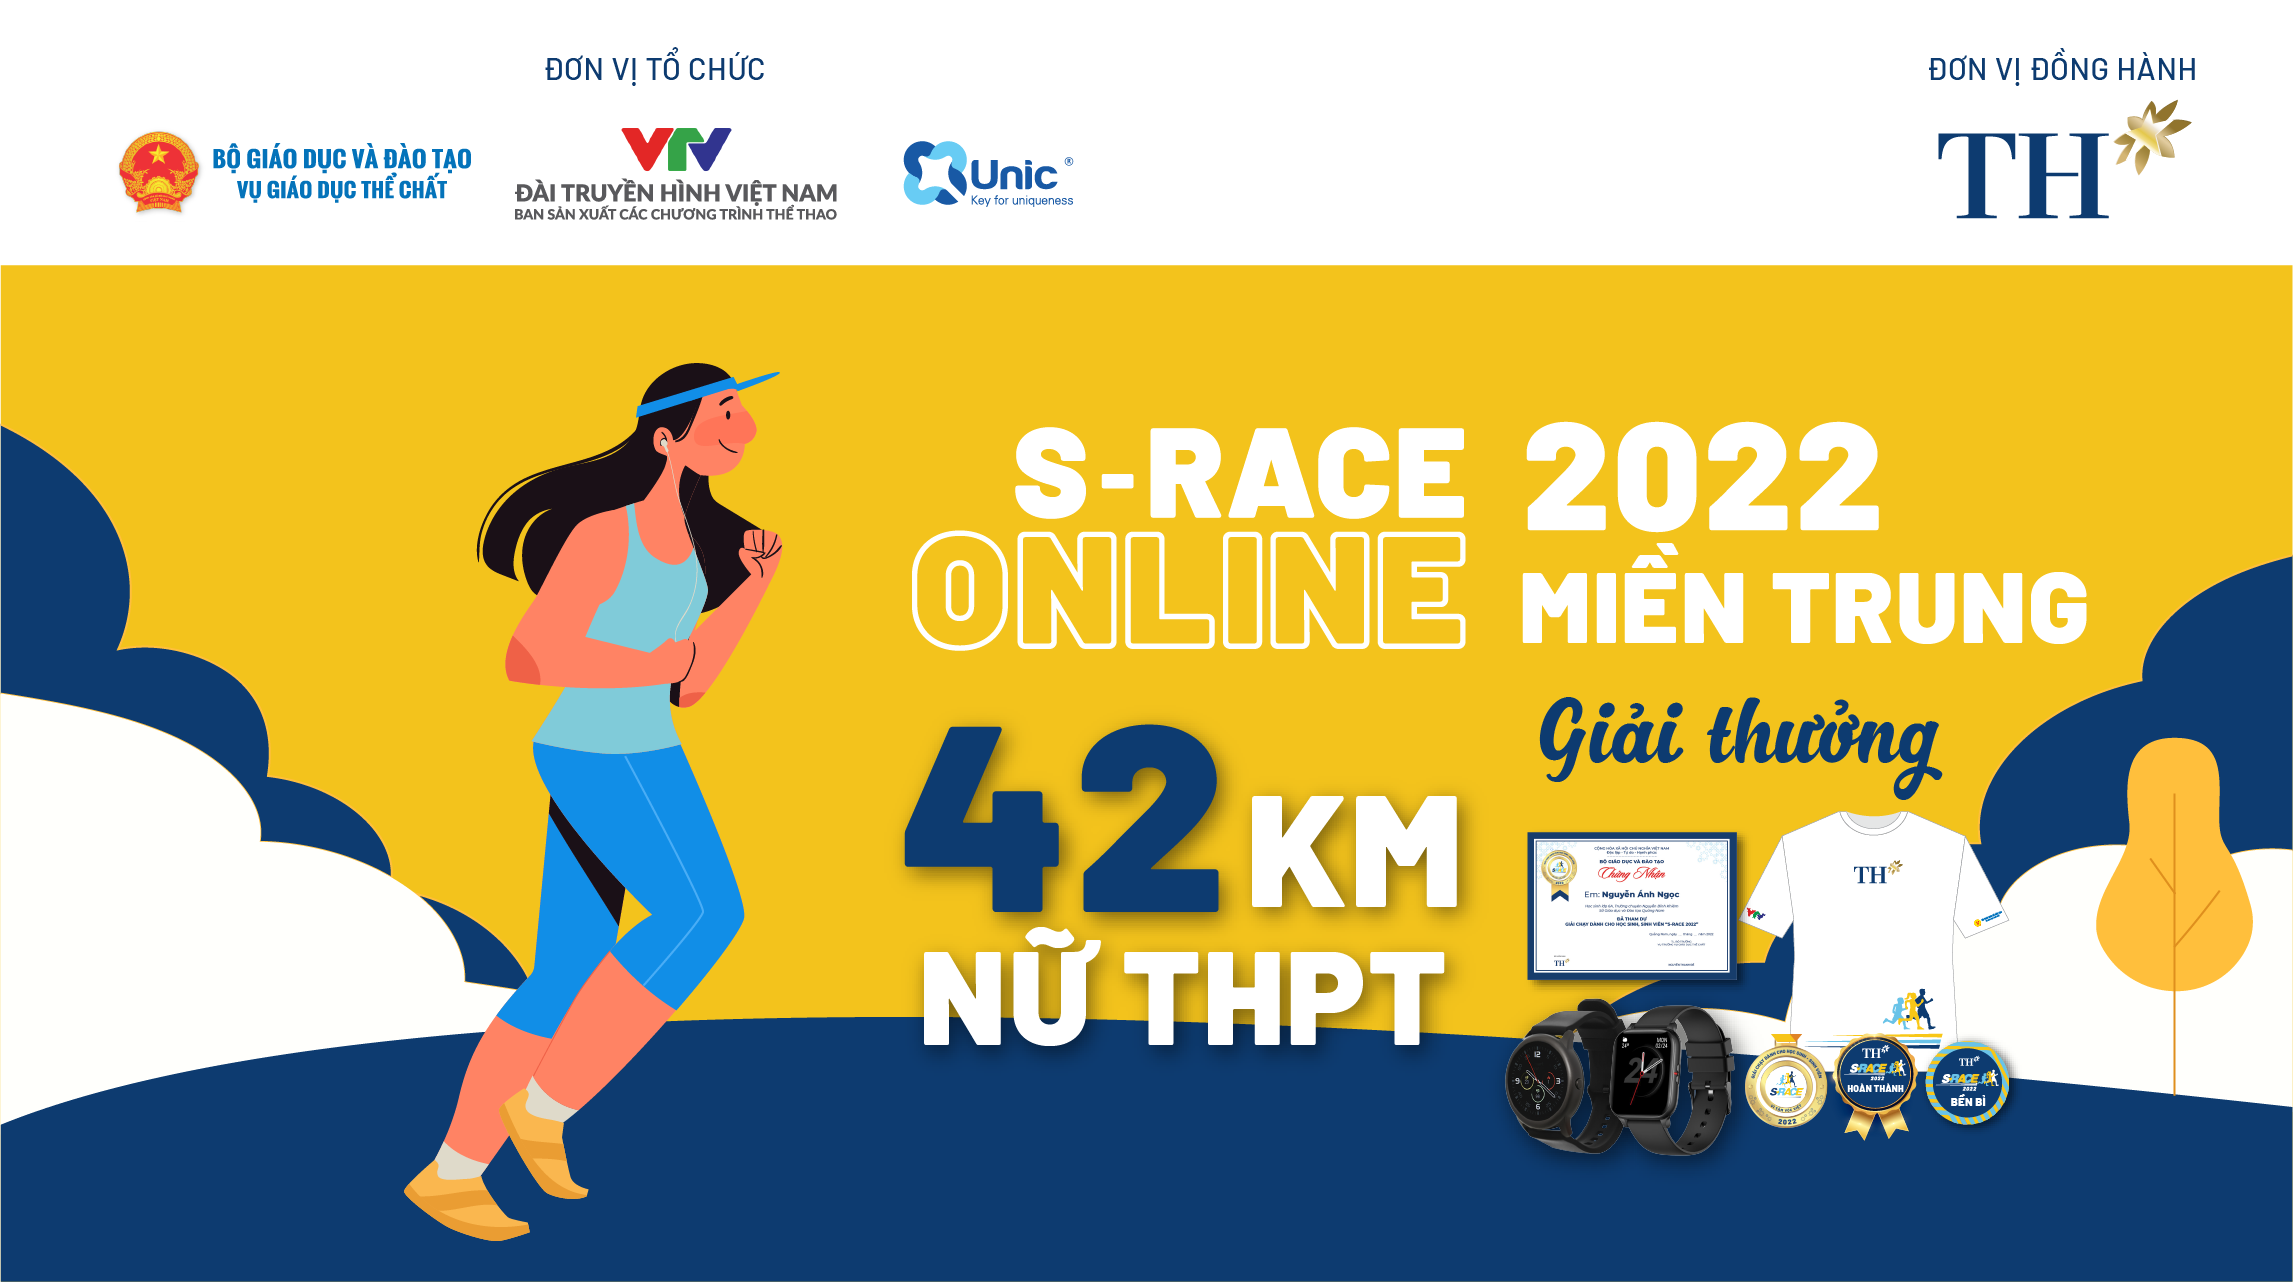 42 KM NỮ THPT (S-Race Online miền Trung)